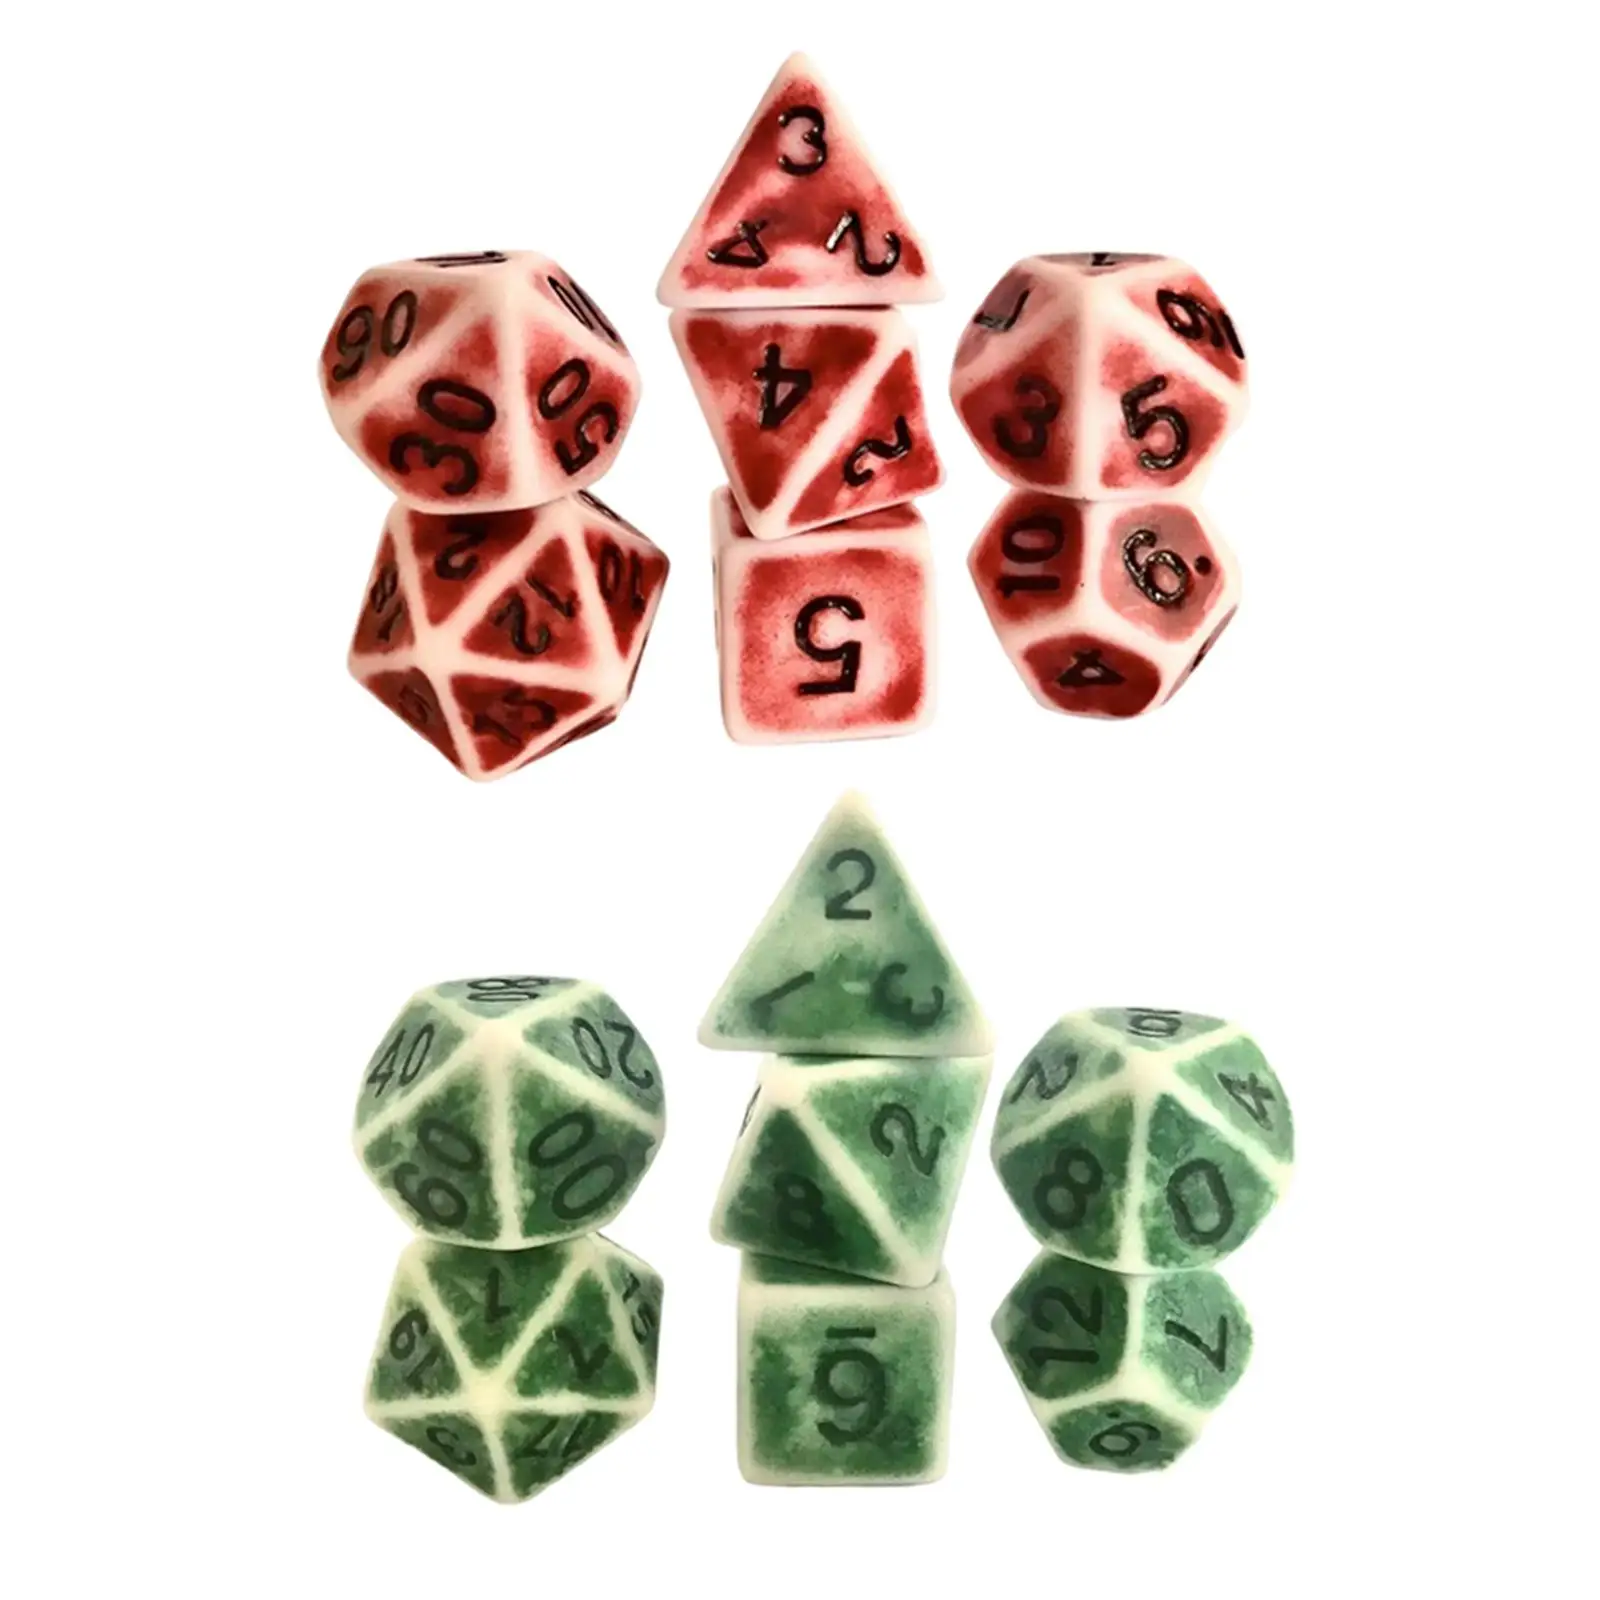 Set of 7 Polyhedral Dice Party Favor D4 D6 D8 D10 D10 D12 D20 for Role Playing Games D&D DND RPG MTG